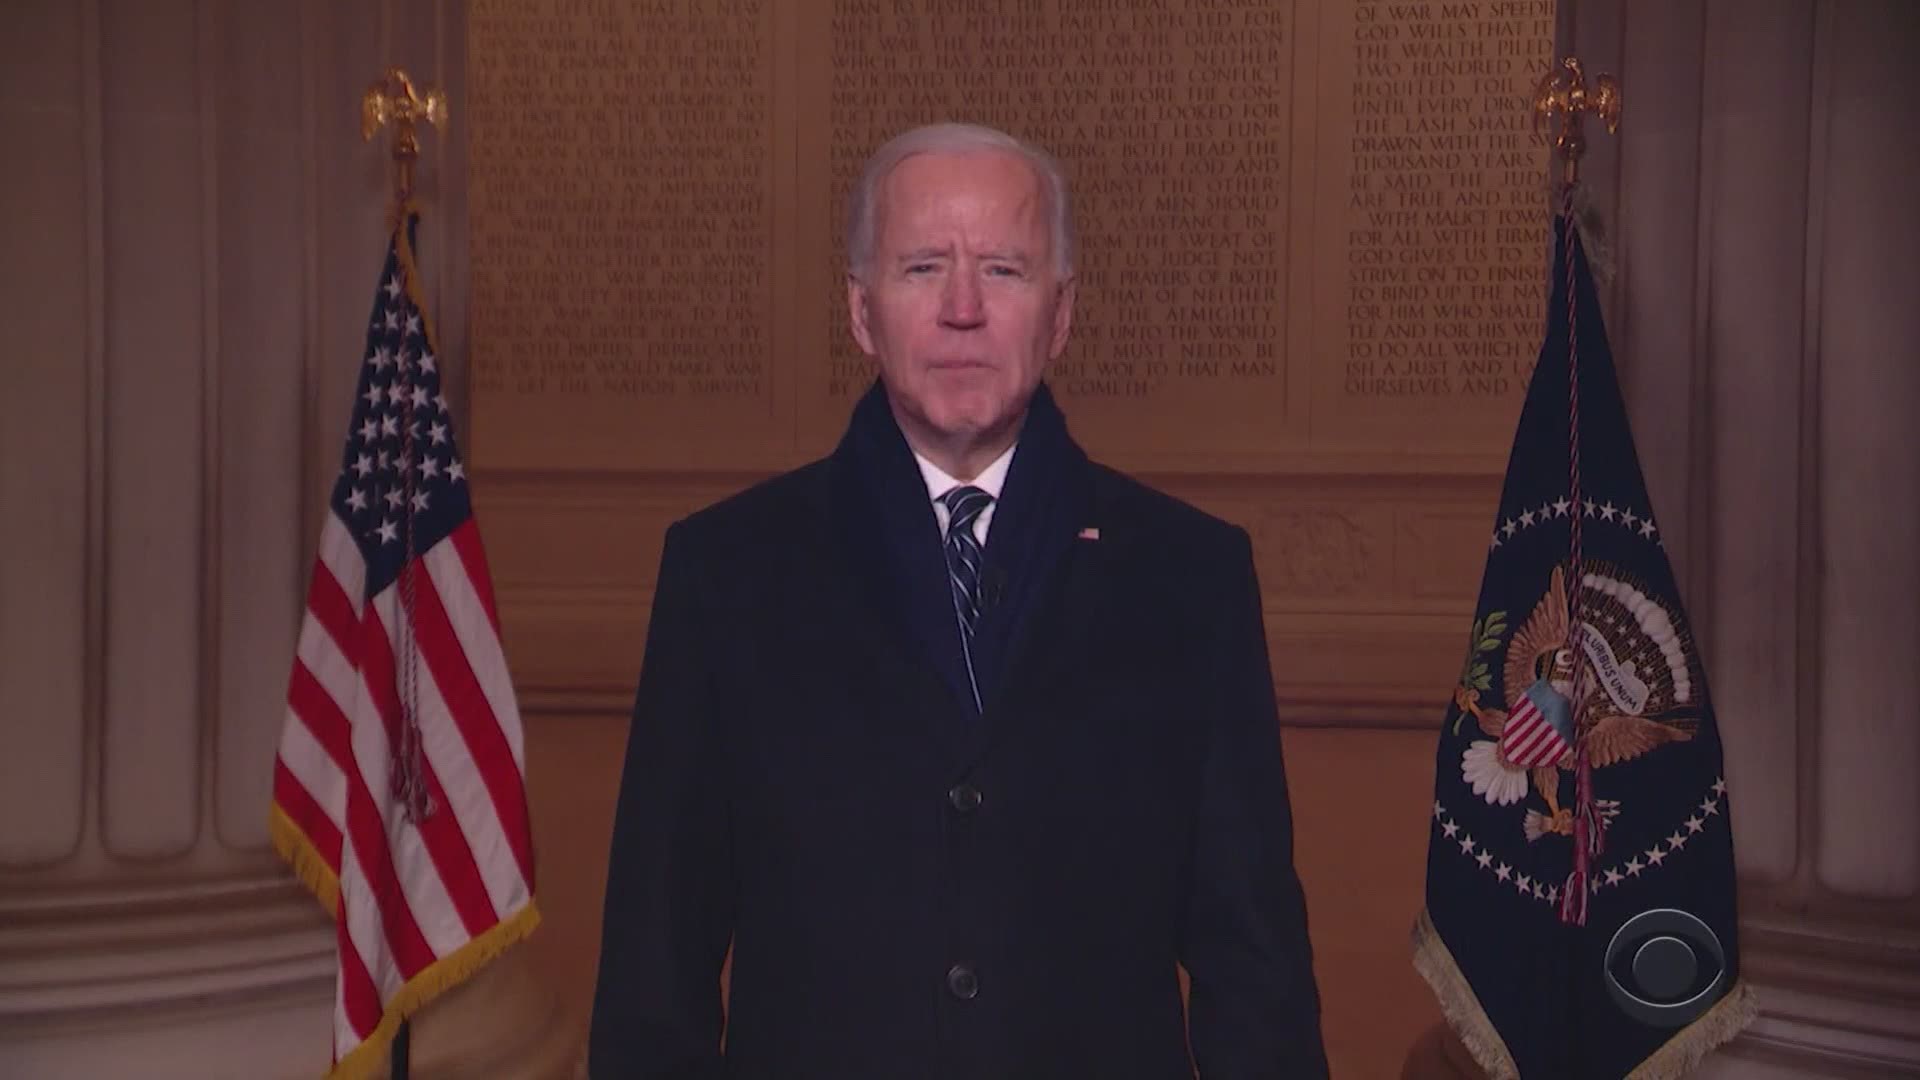 Jan. 20, 2021 was historic for several reasons as President Joe Biden and Vice President Kamala Harris were sworn into office.